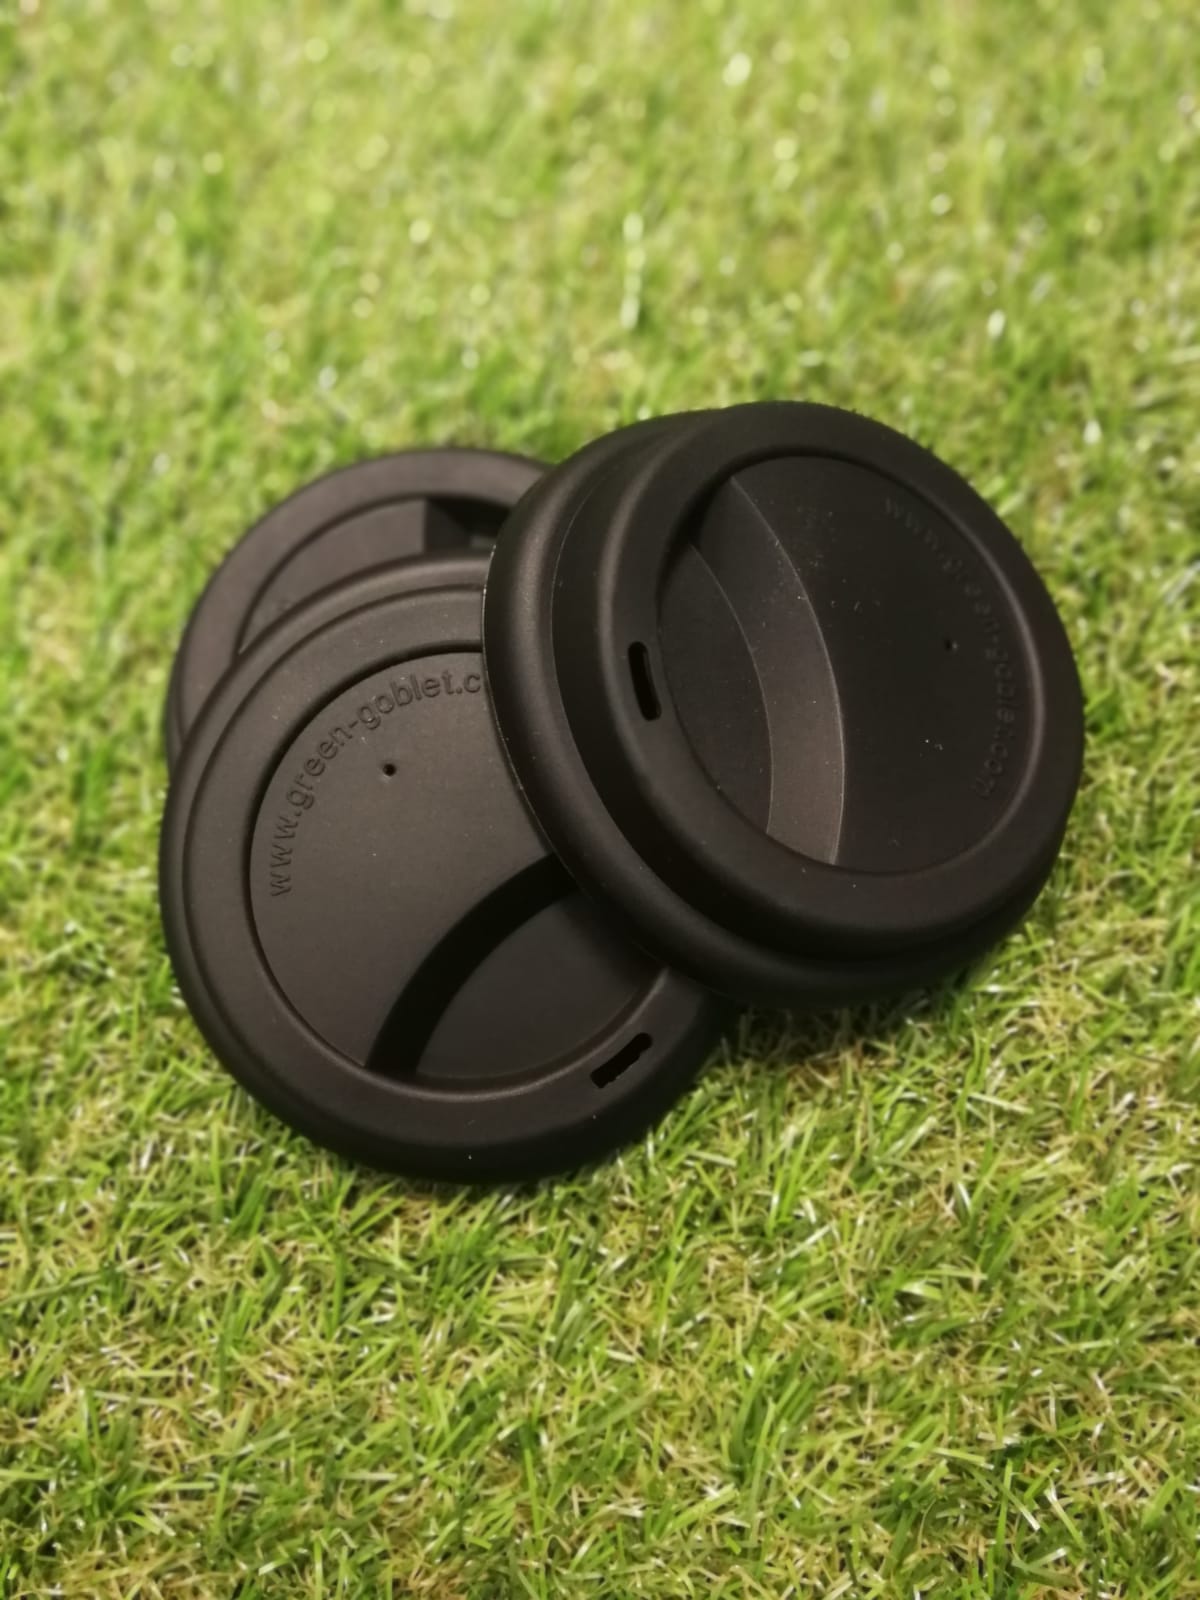 gg reusable coffee lids